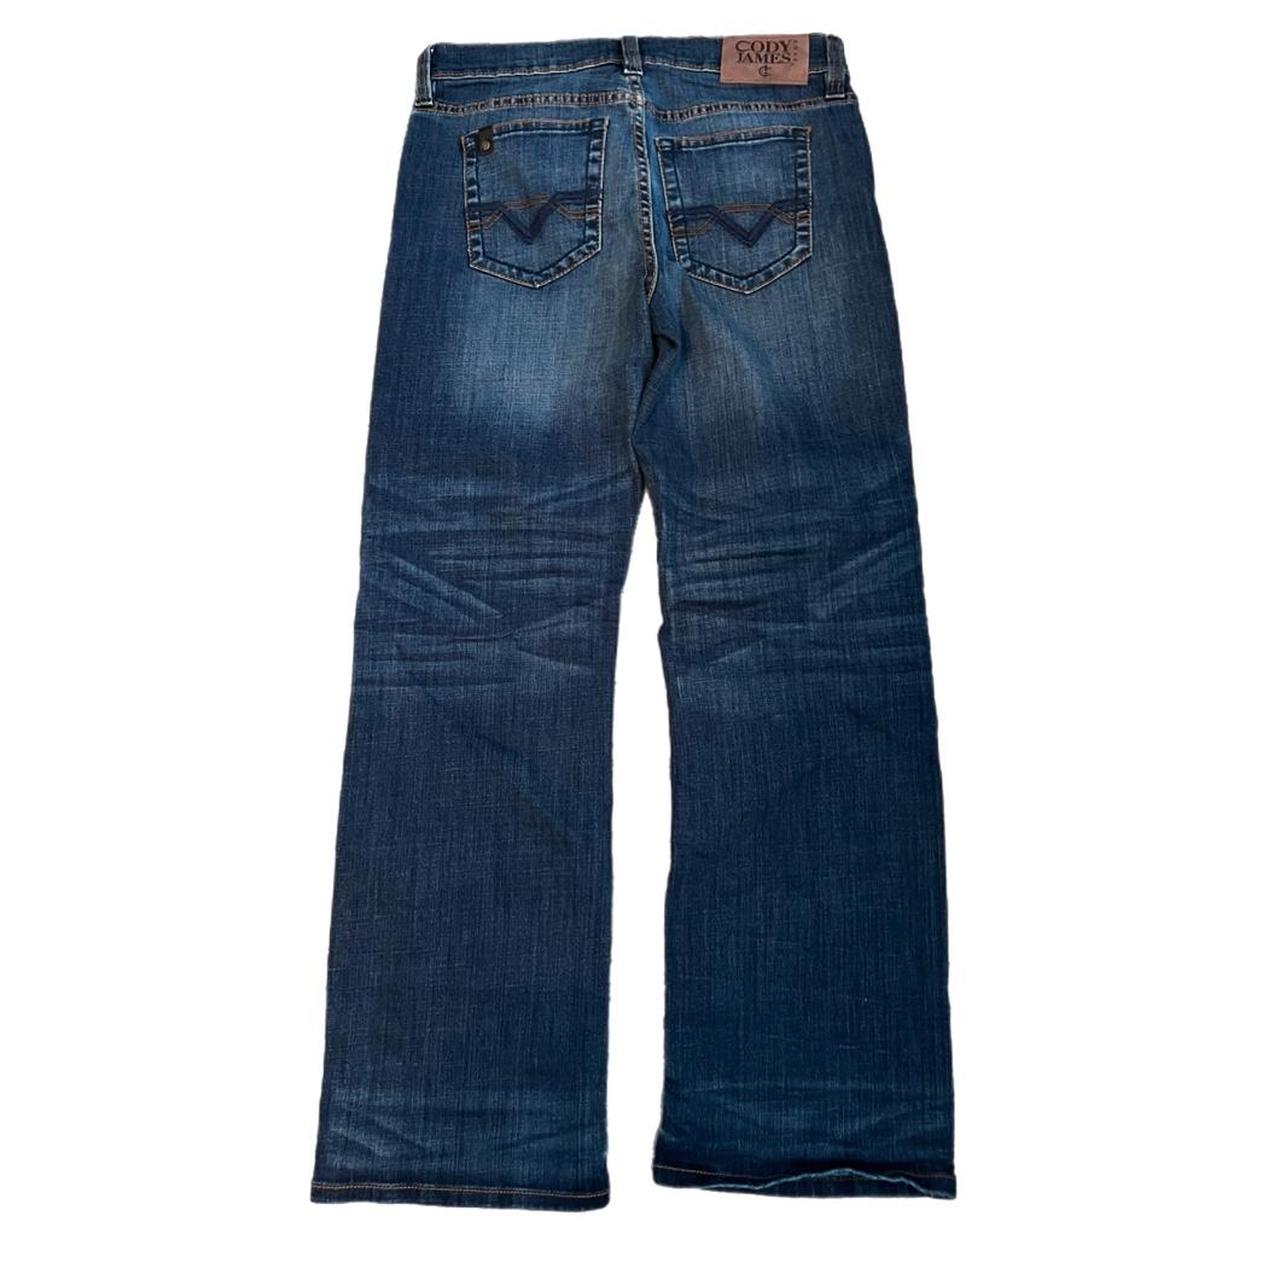 Cody James Men's Navy Jeans (2)